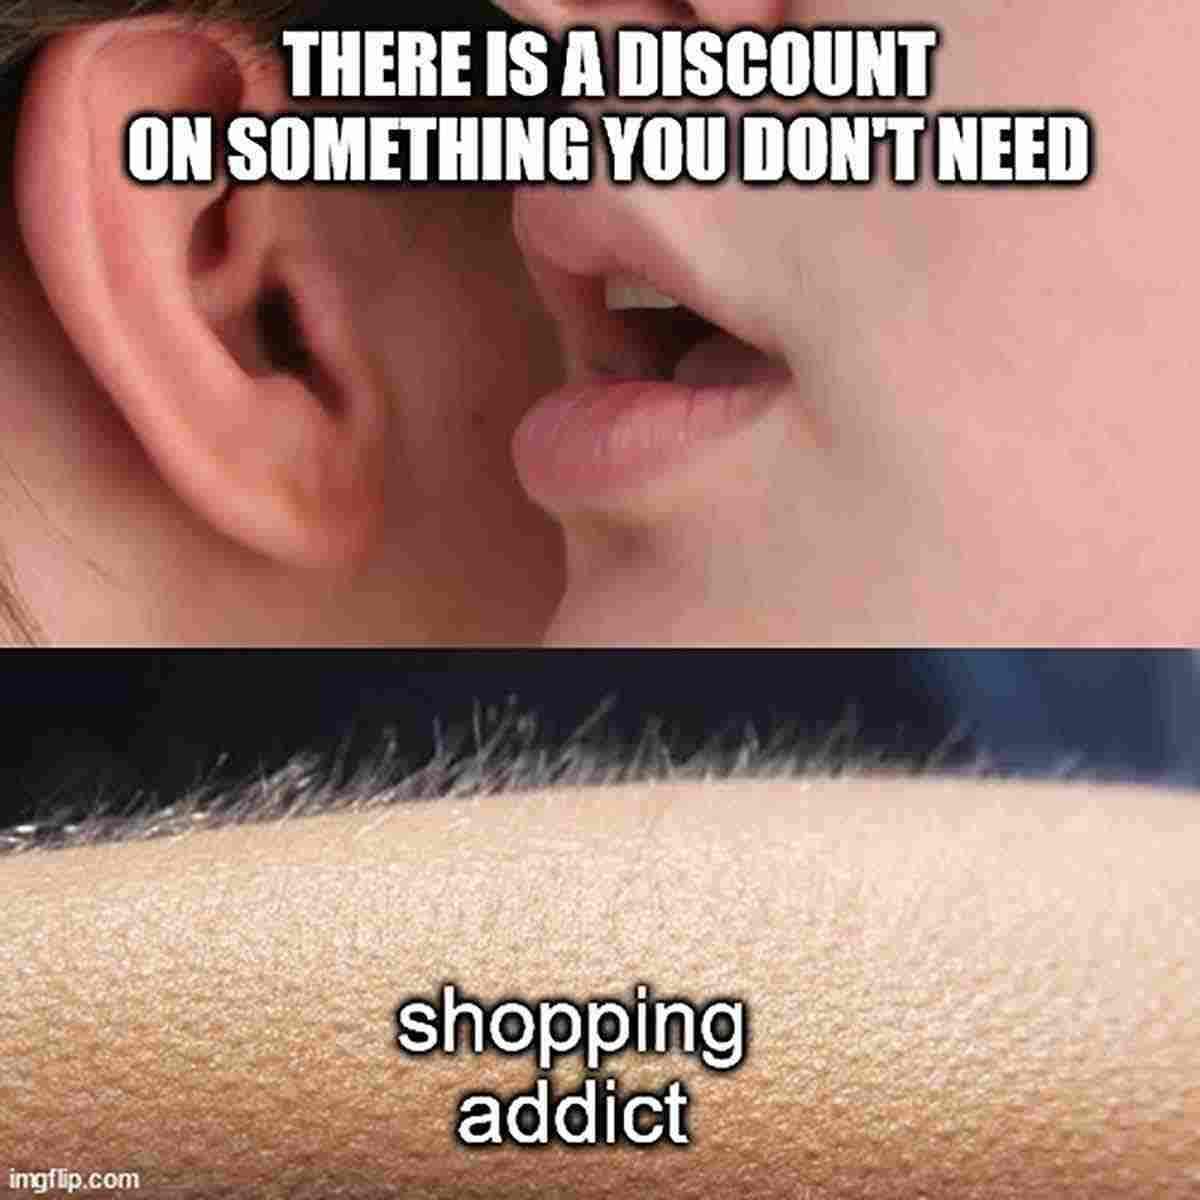 quit Online shopping addiction meme